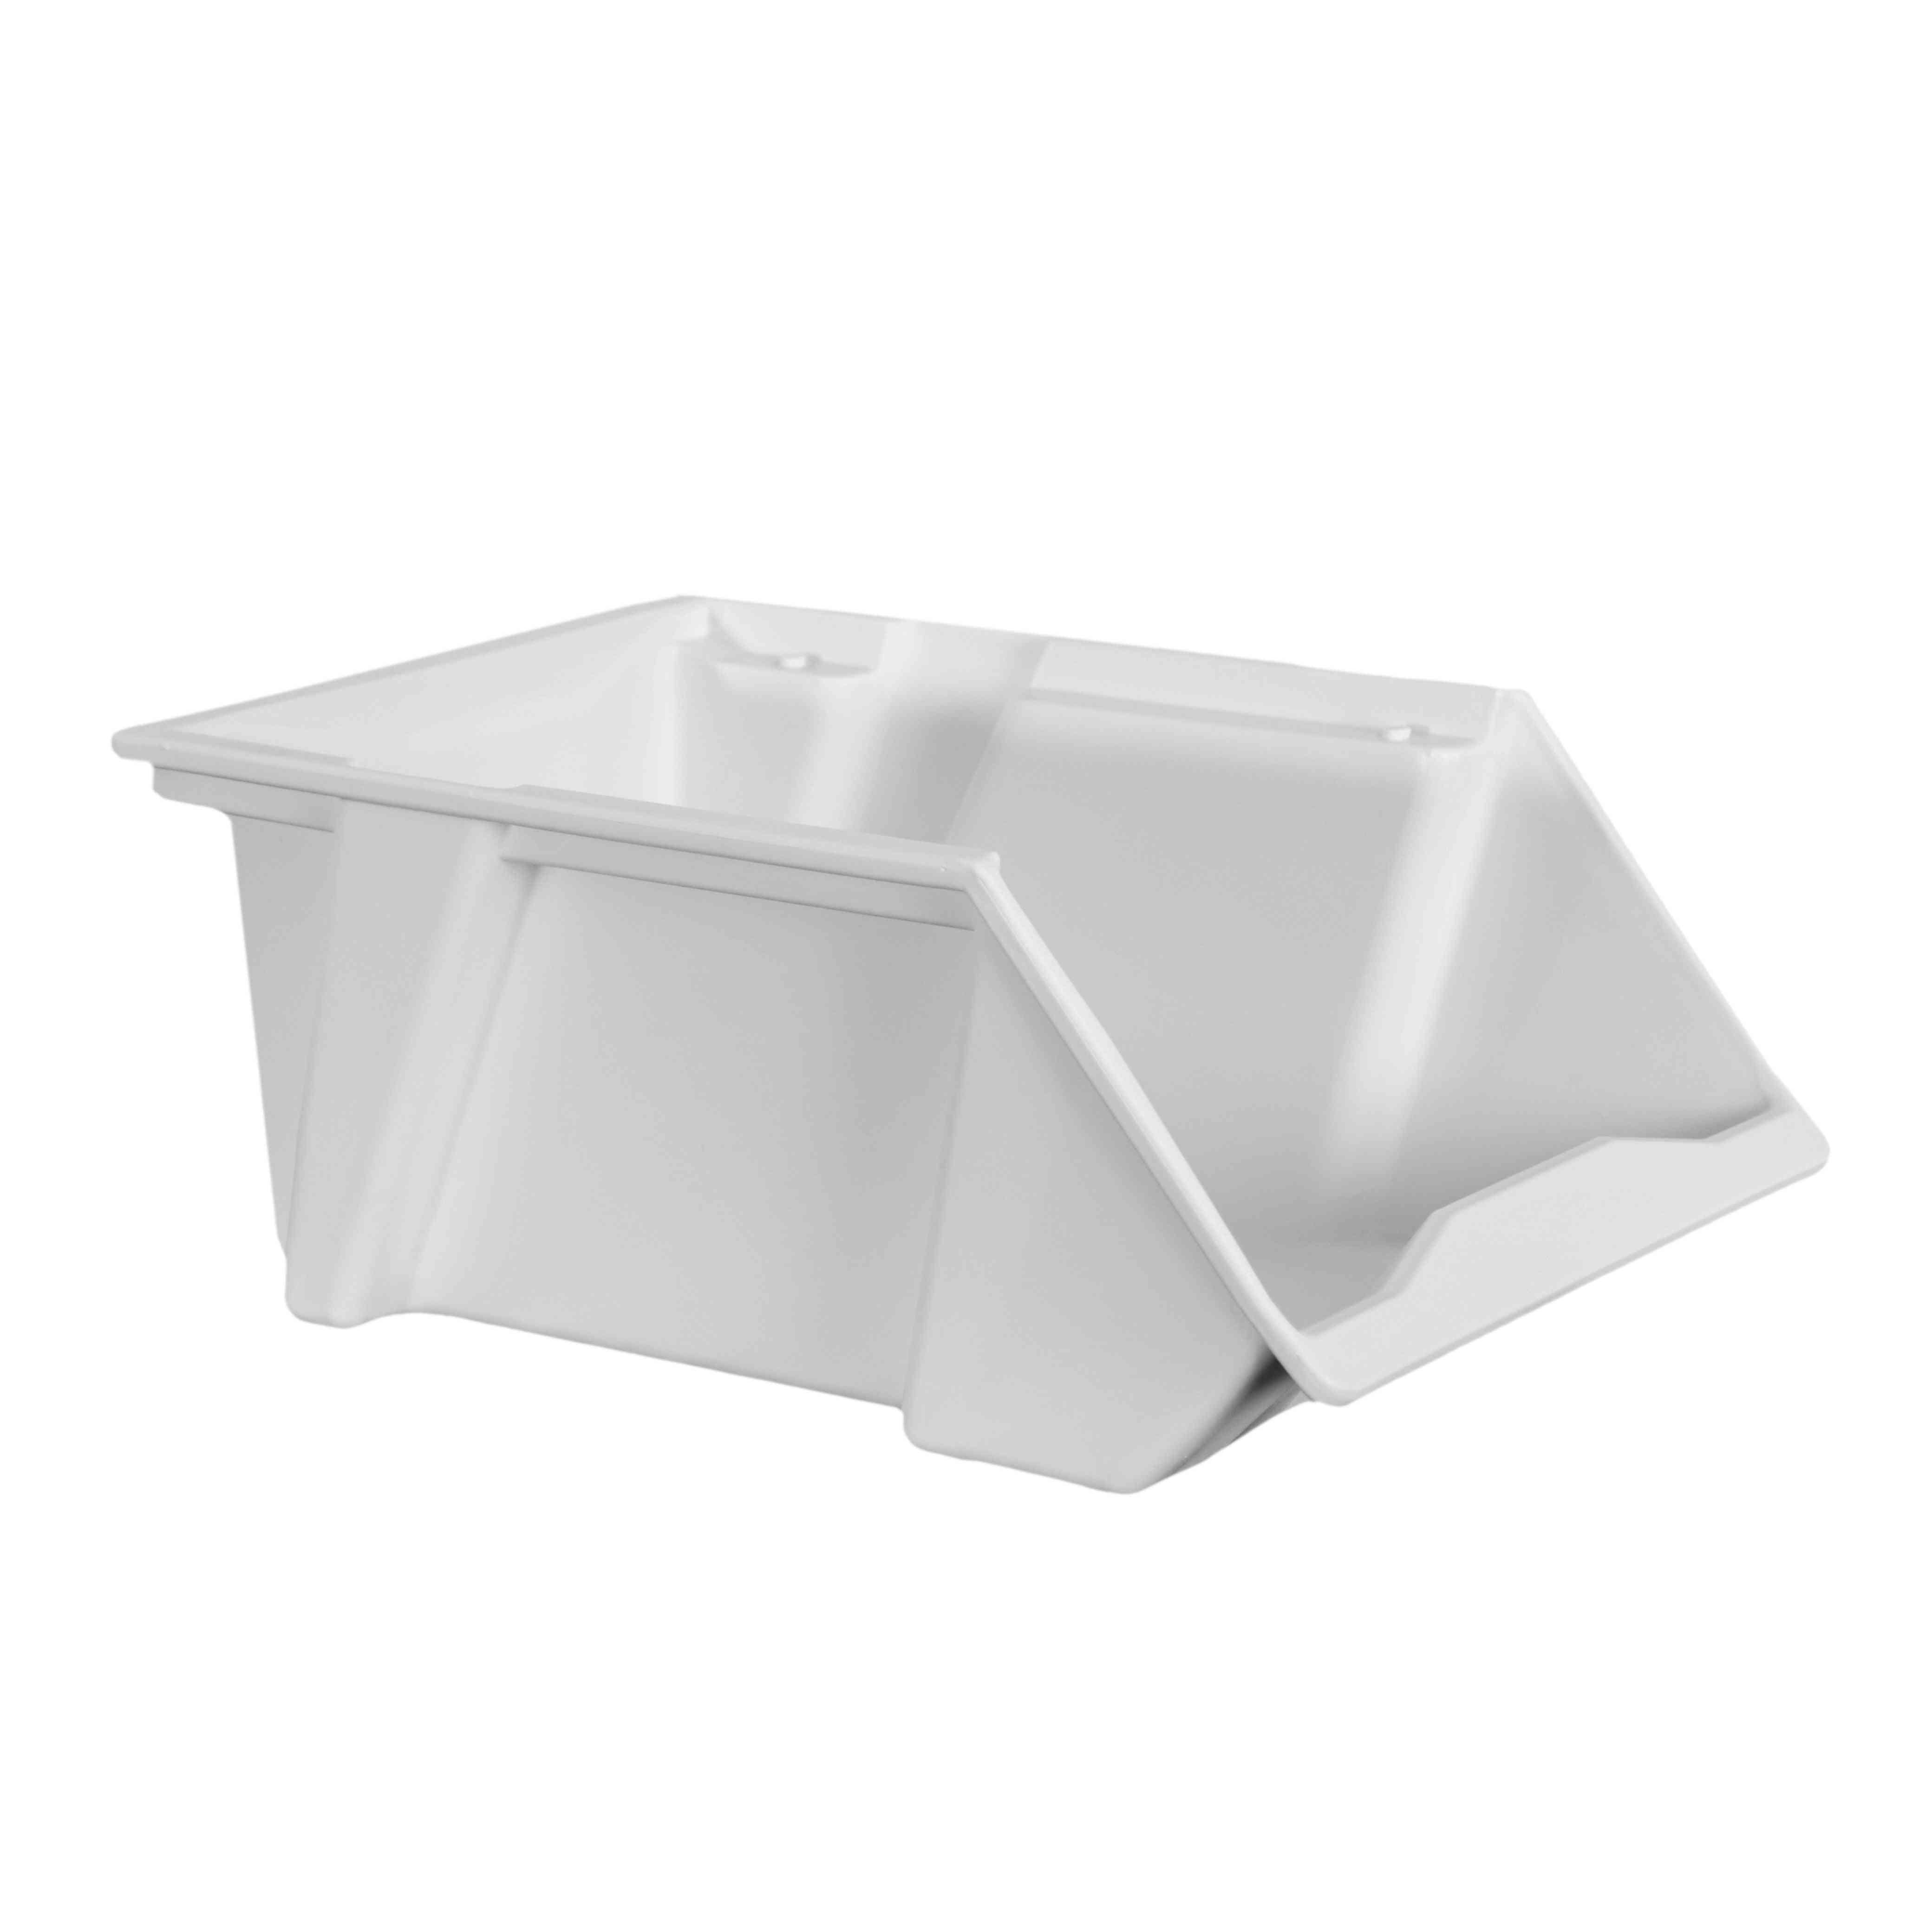 A single Boer Shelf Pack Nesting bin in White